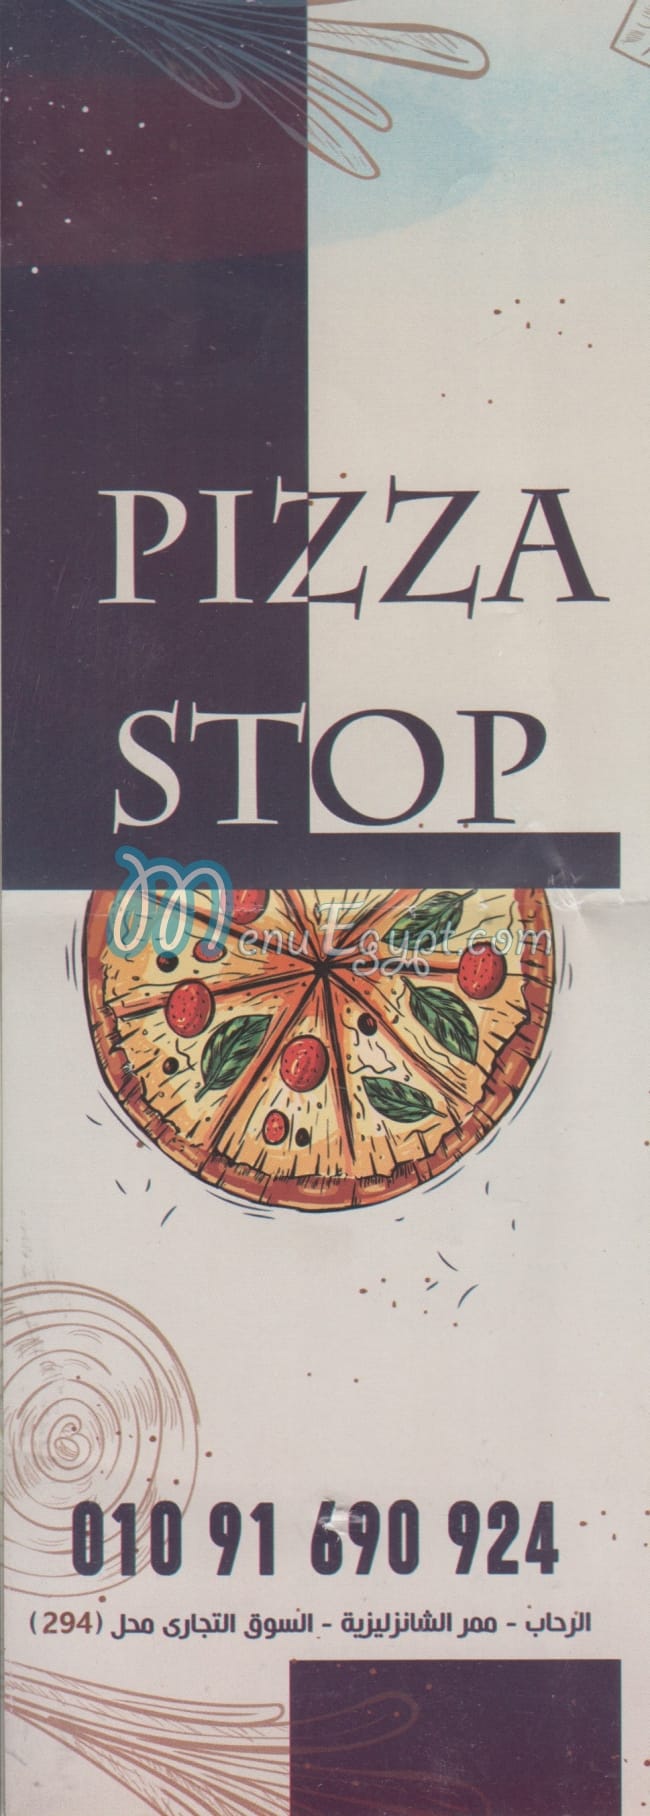 Pizza Stop egypt